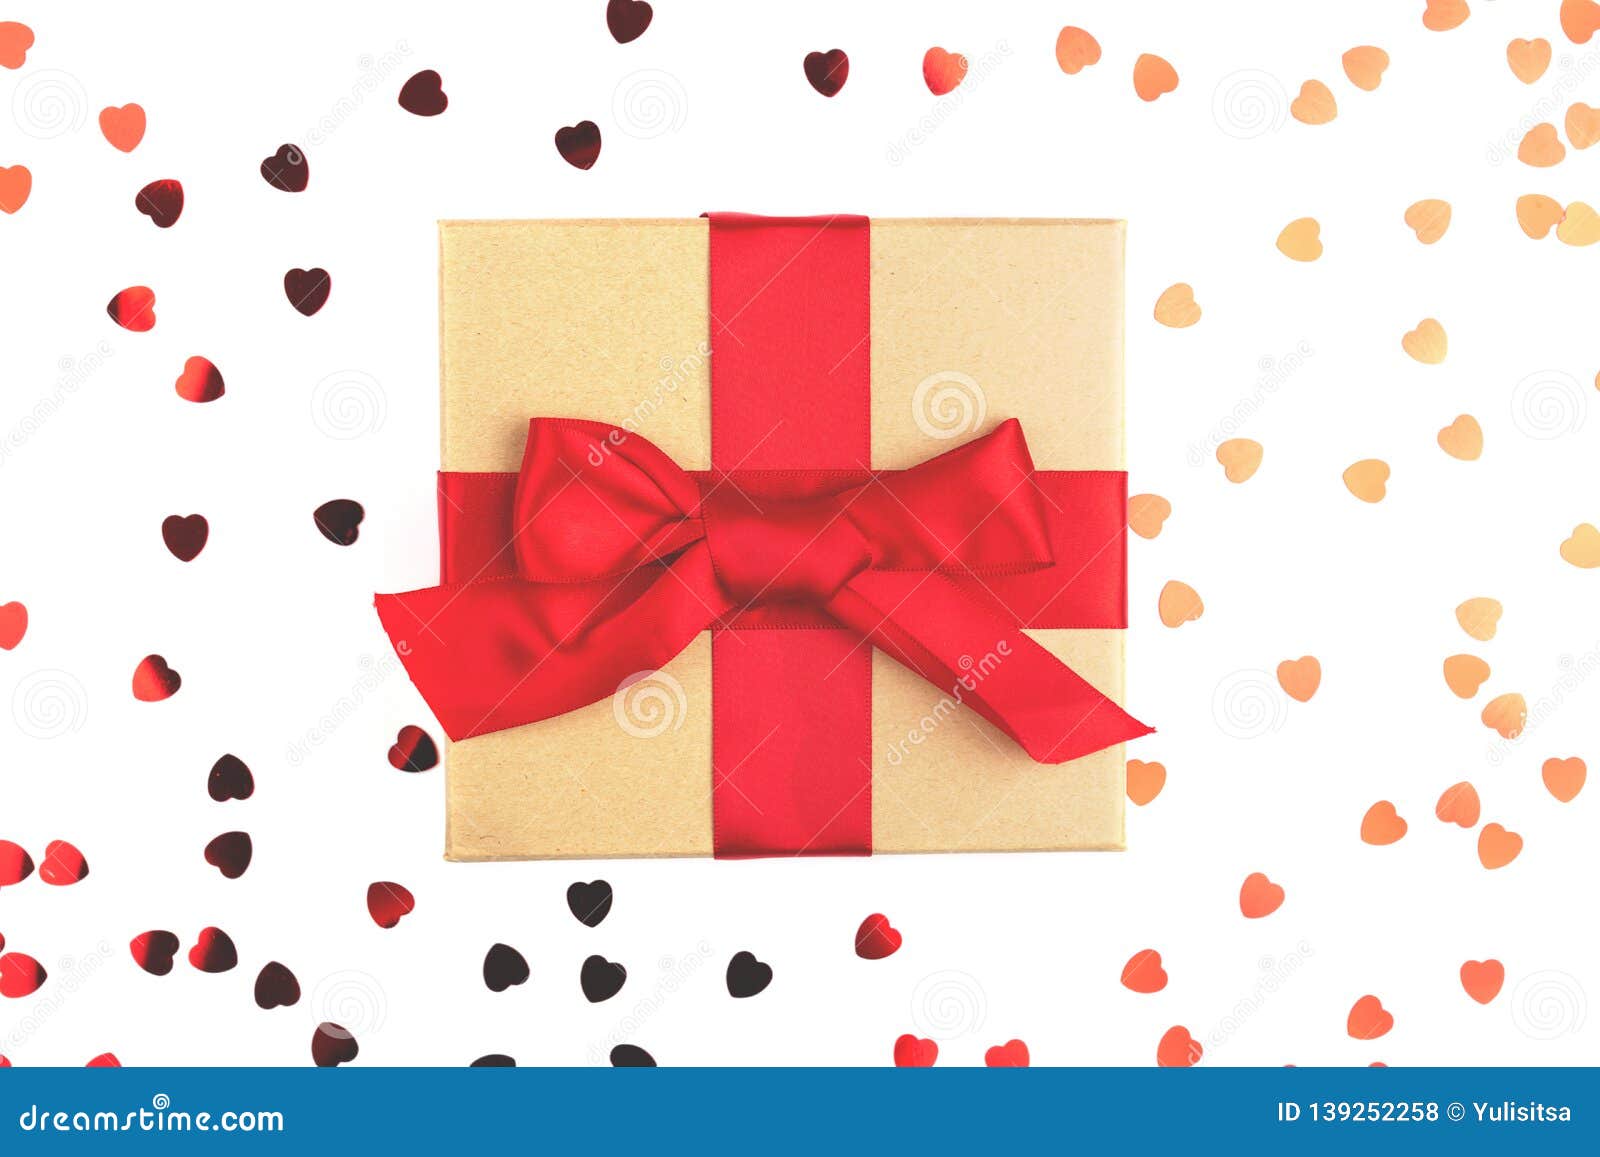 Gift box and confetti stock photo. Image of decoration - 139252258